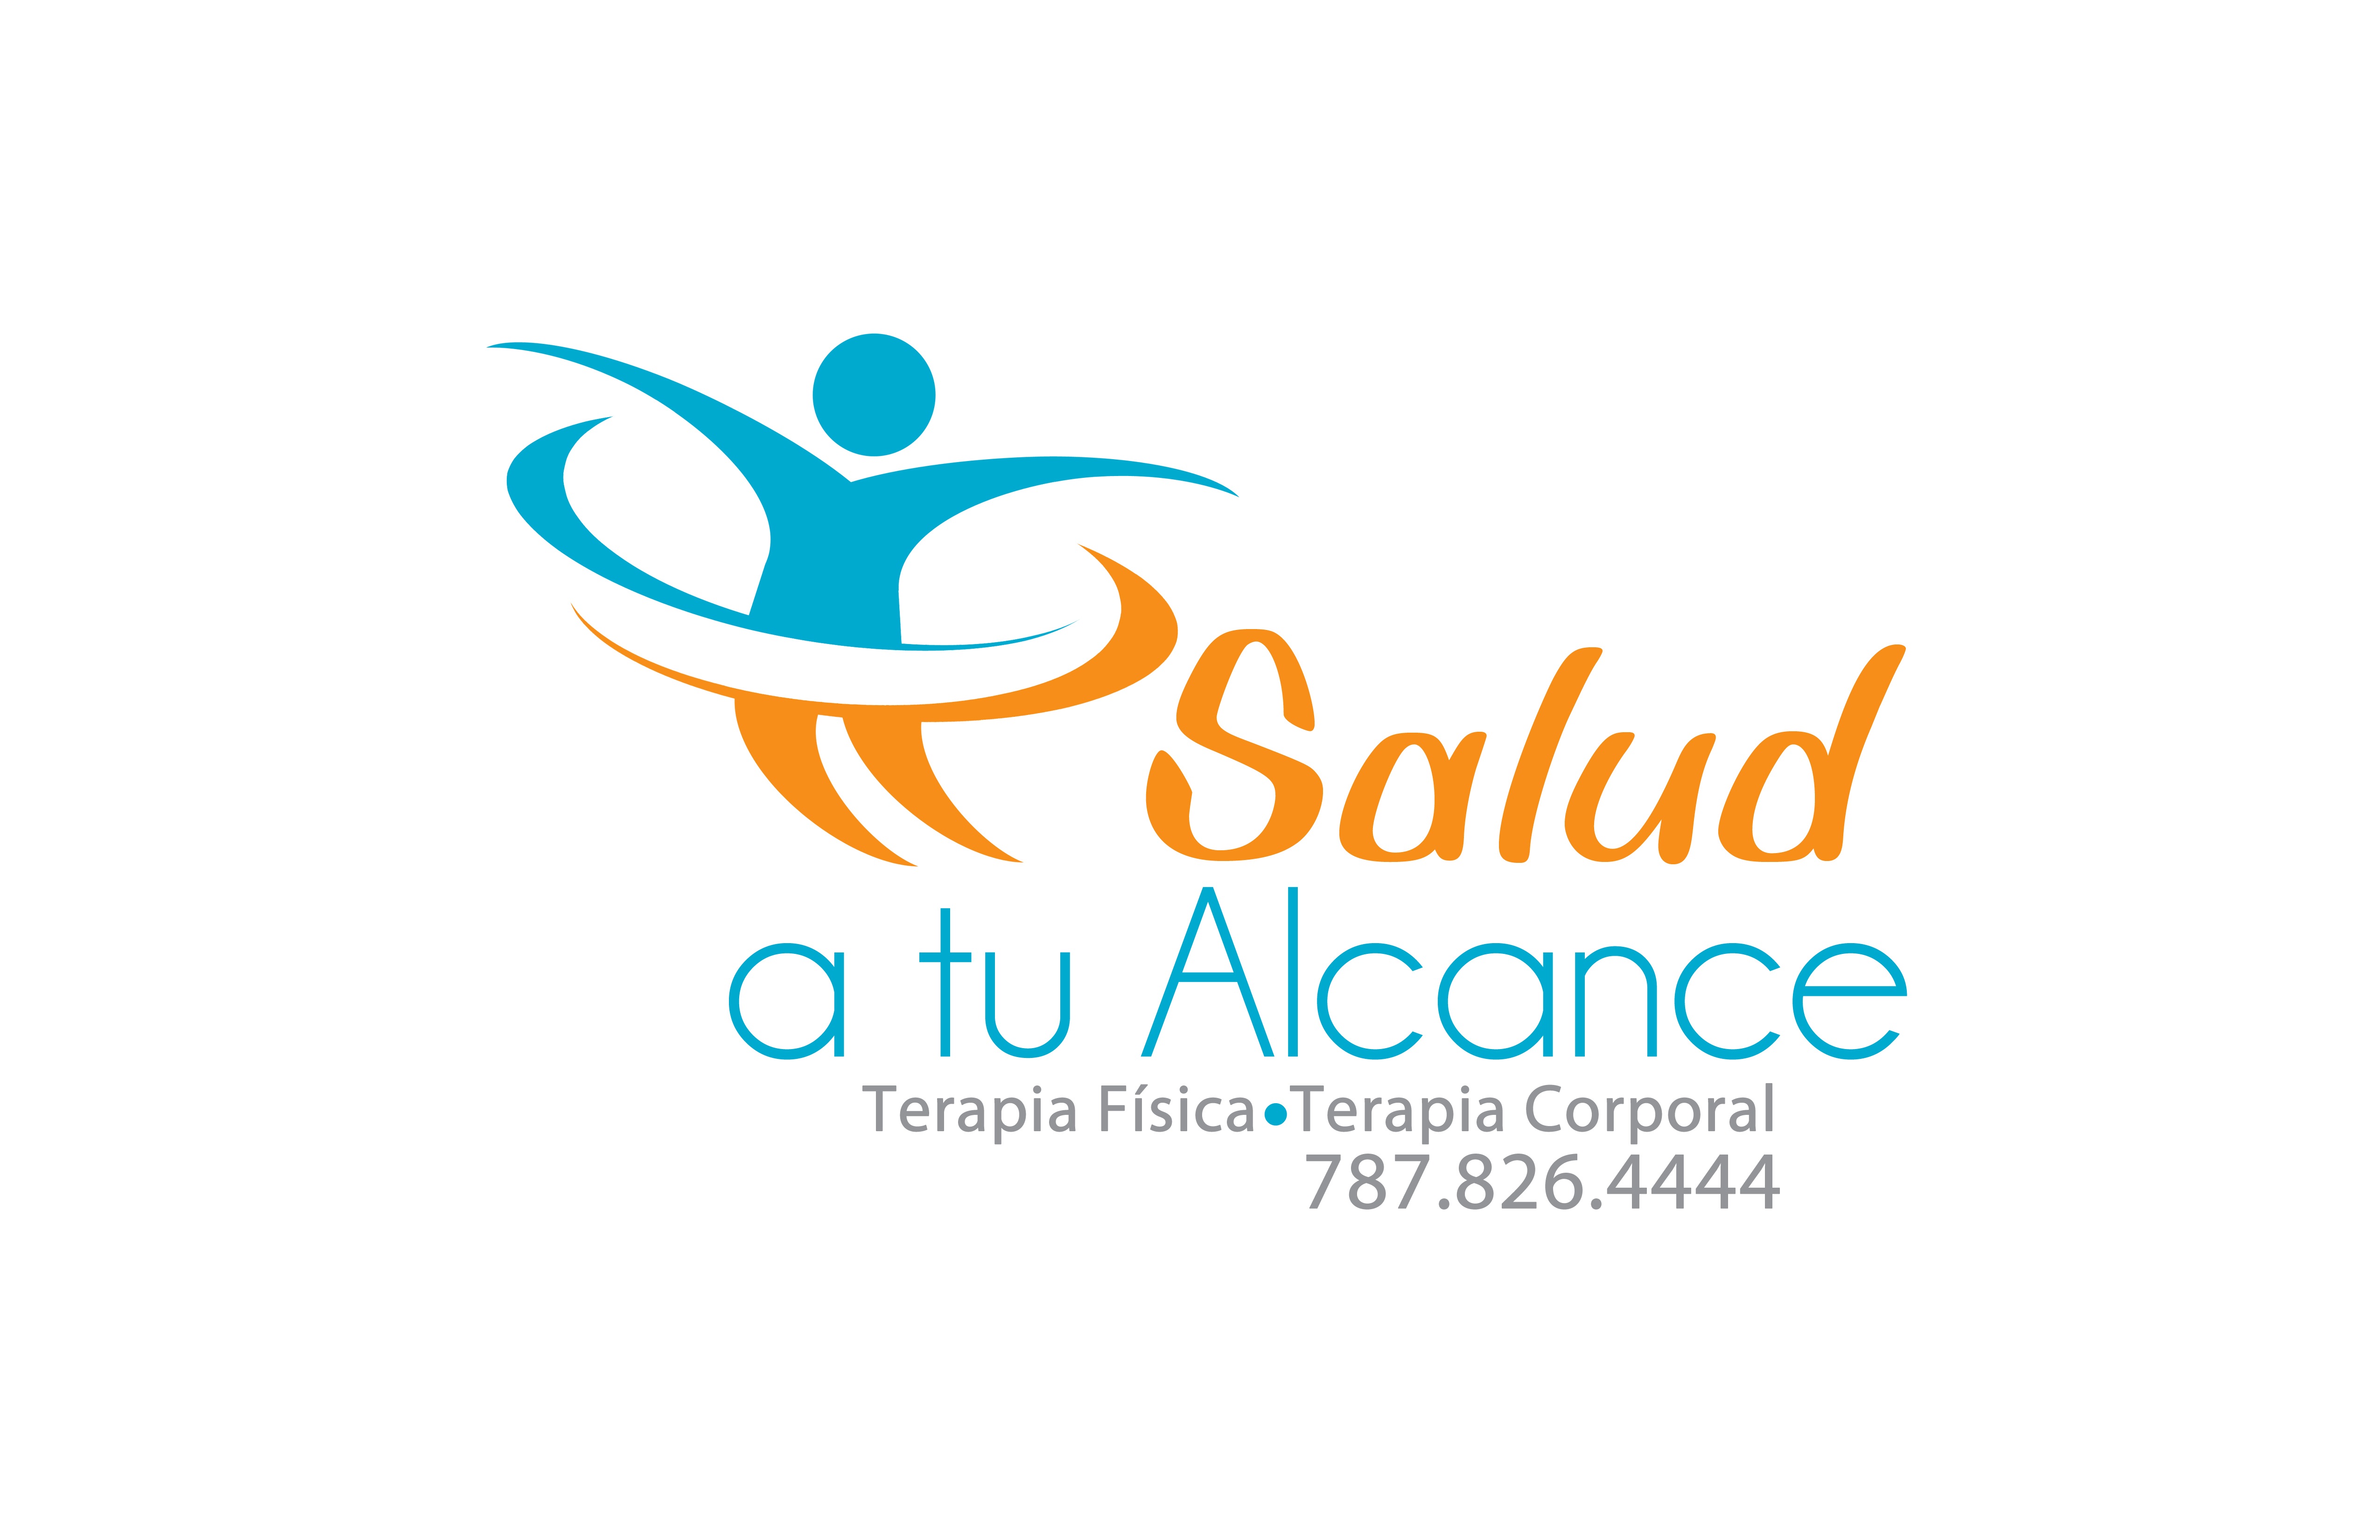 Tu Salud Logo photo - 1